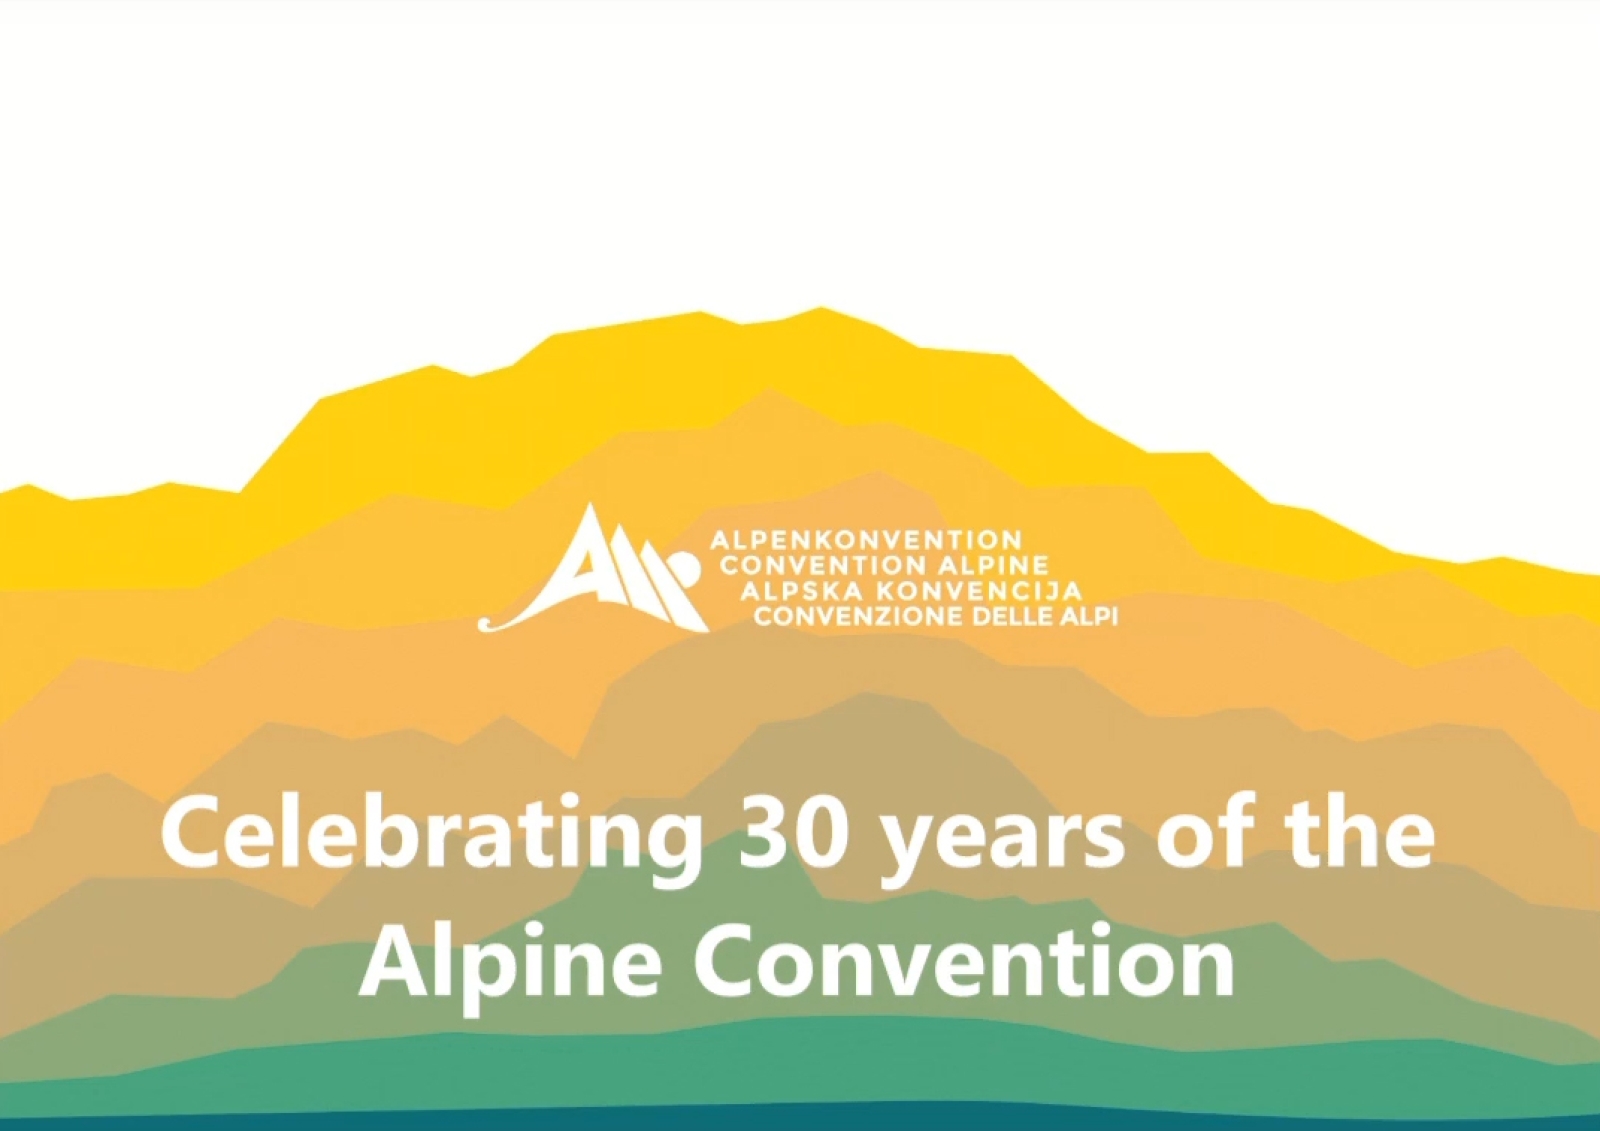 The Alpine Convention celebrates its 30th anniversary